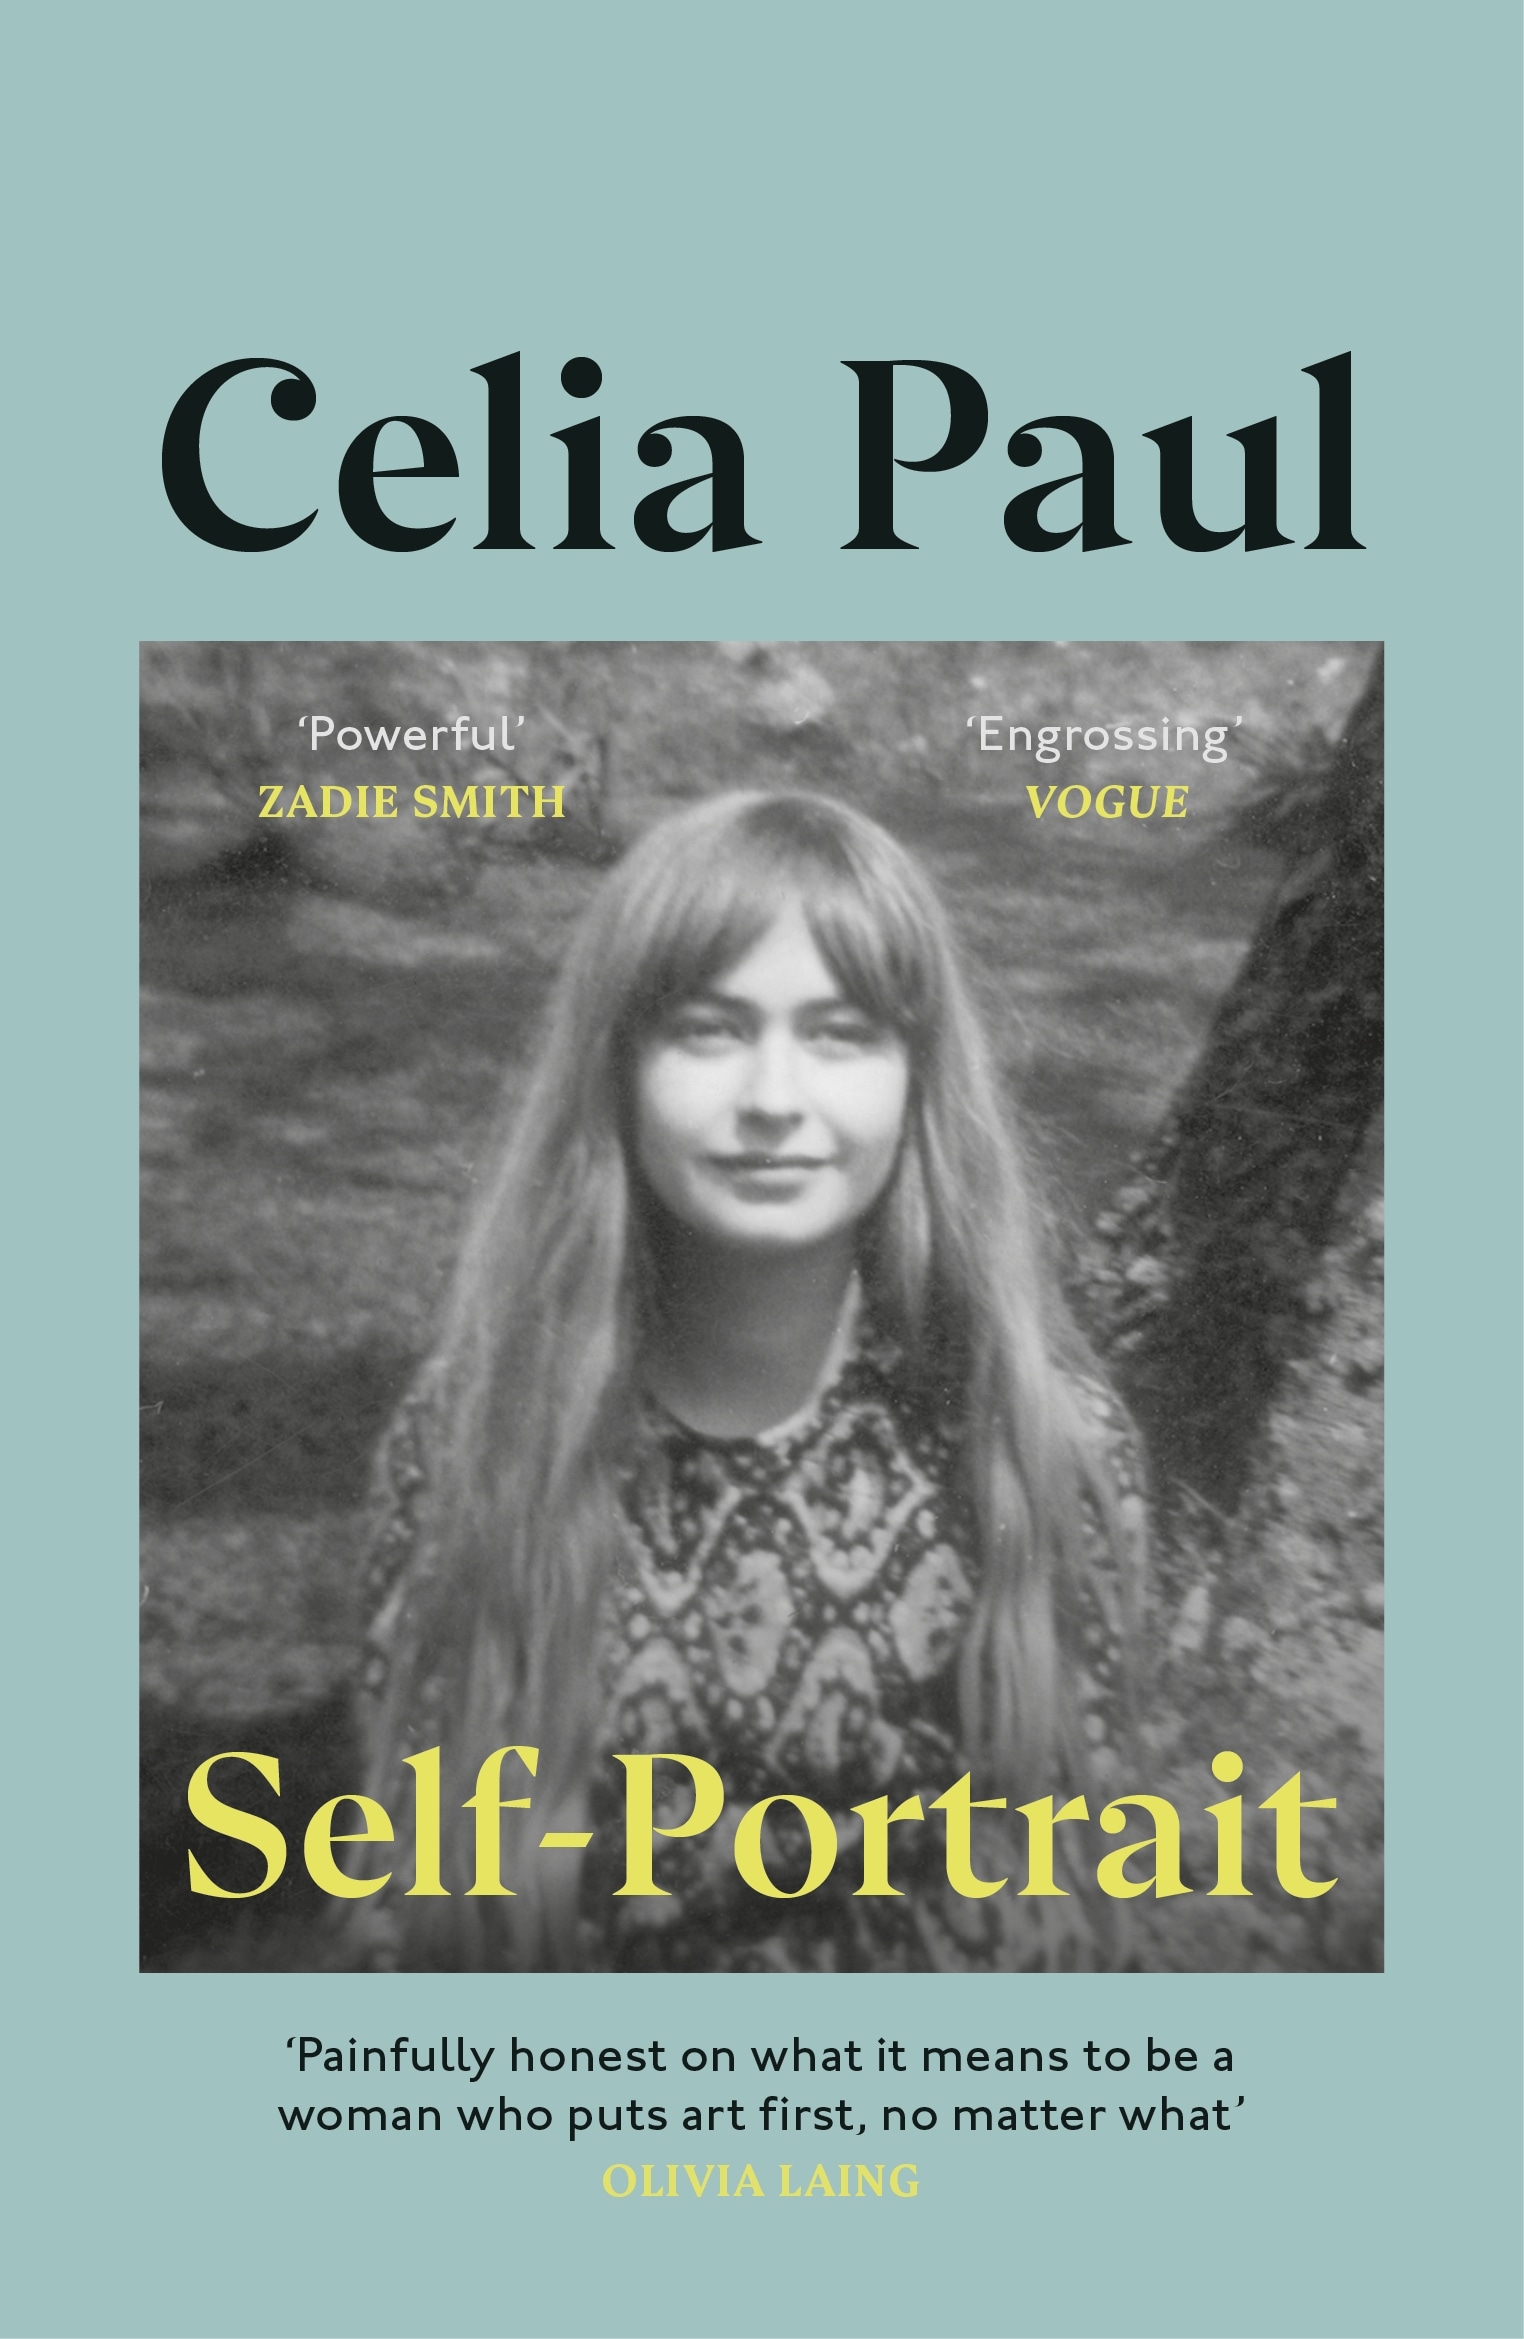 Book “Self-Portrait” by Celia Paul — April 7, 2022